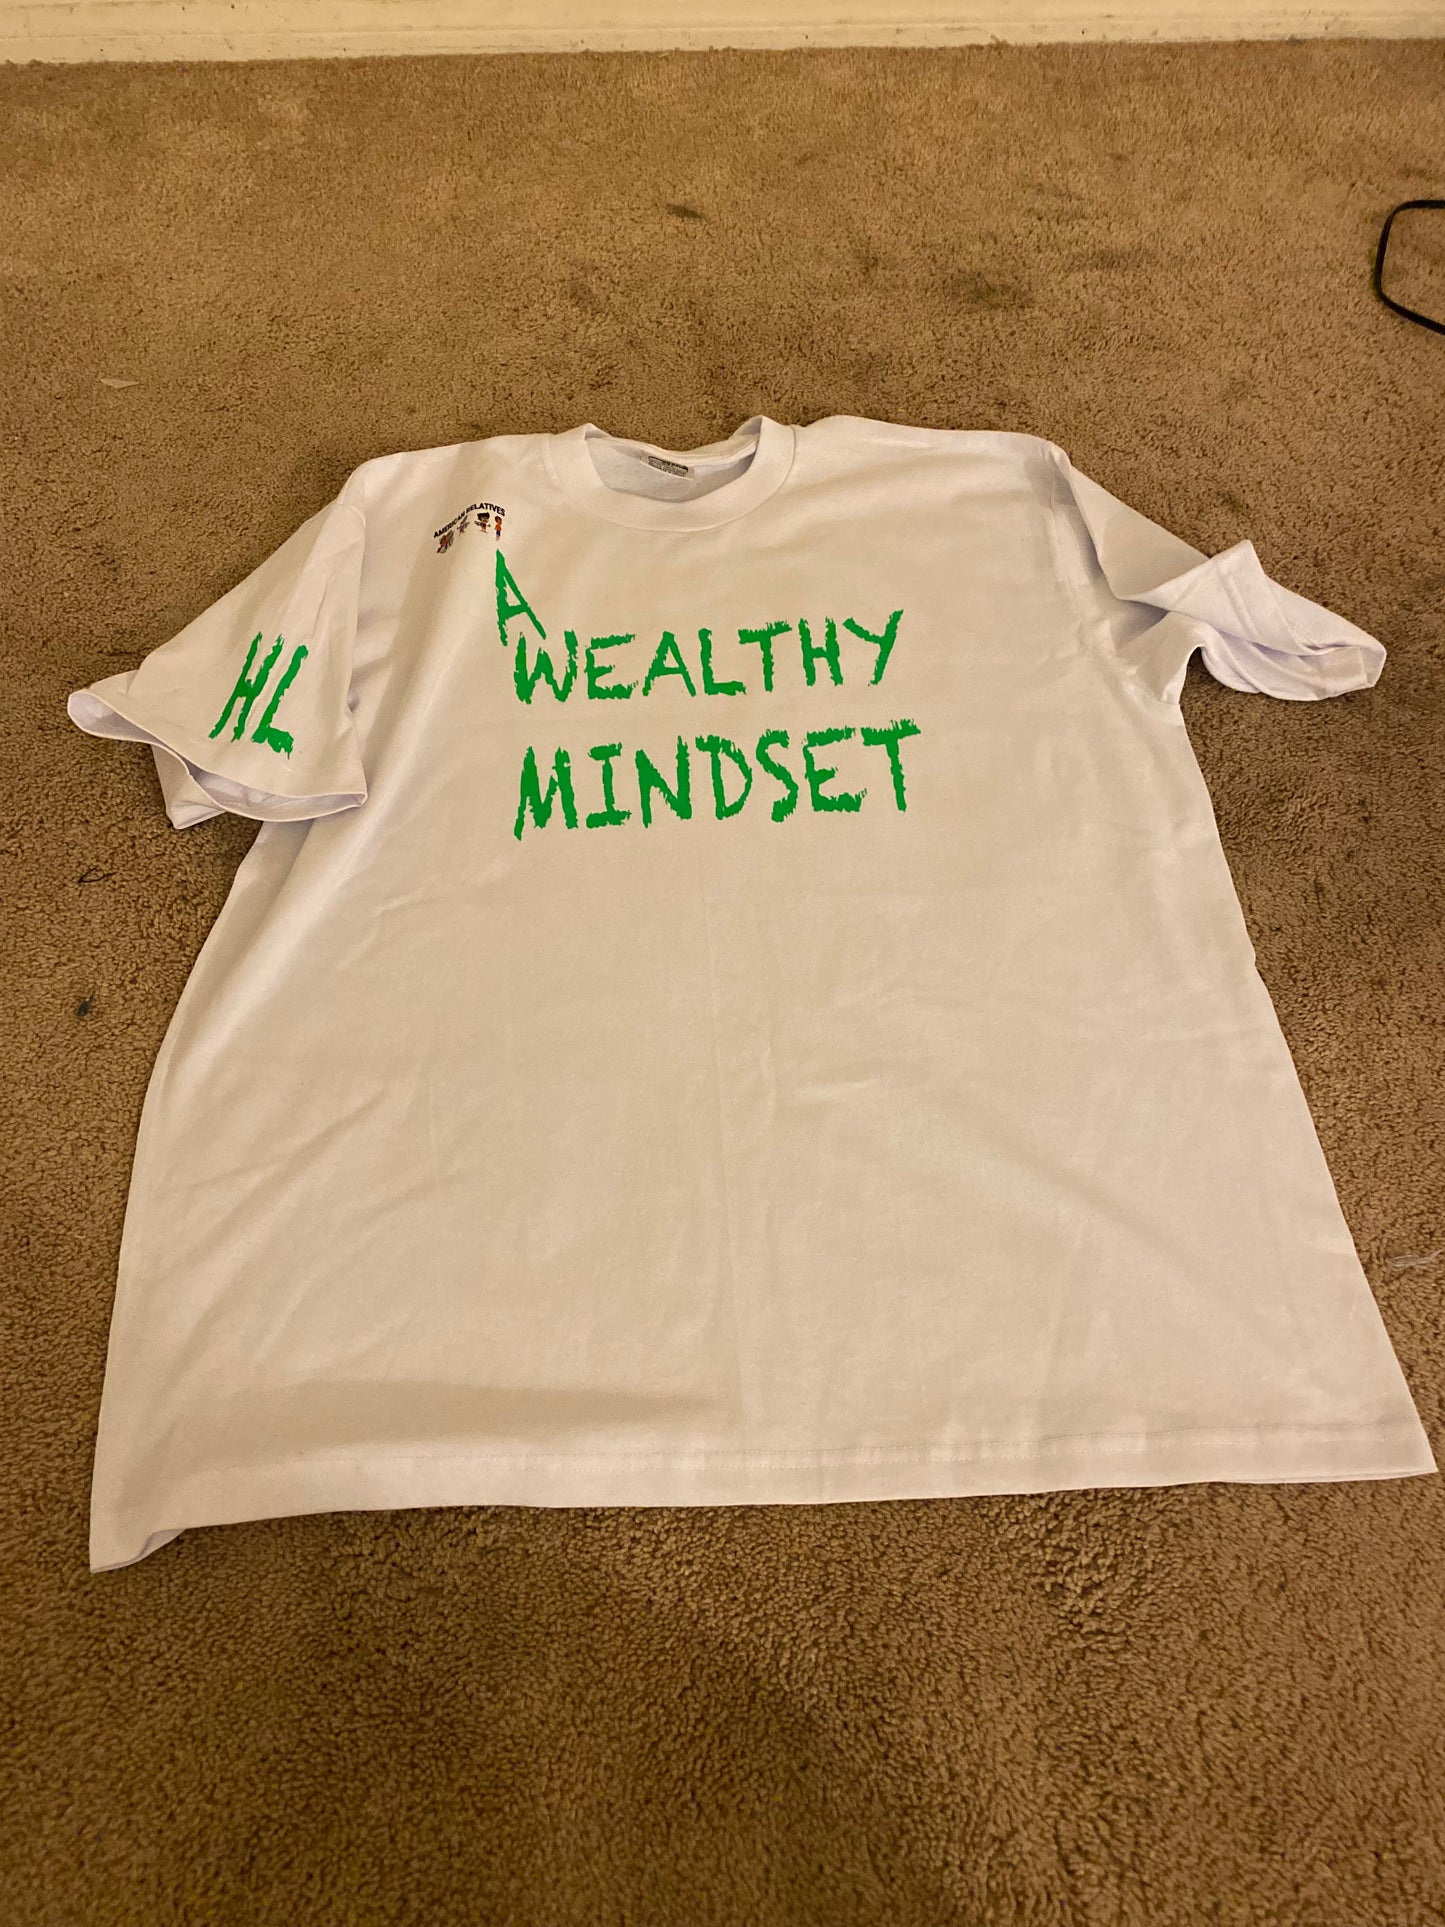 A Wealthy Mindset ( t-shirt)